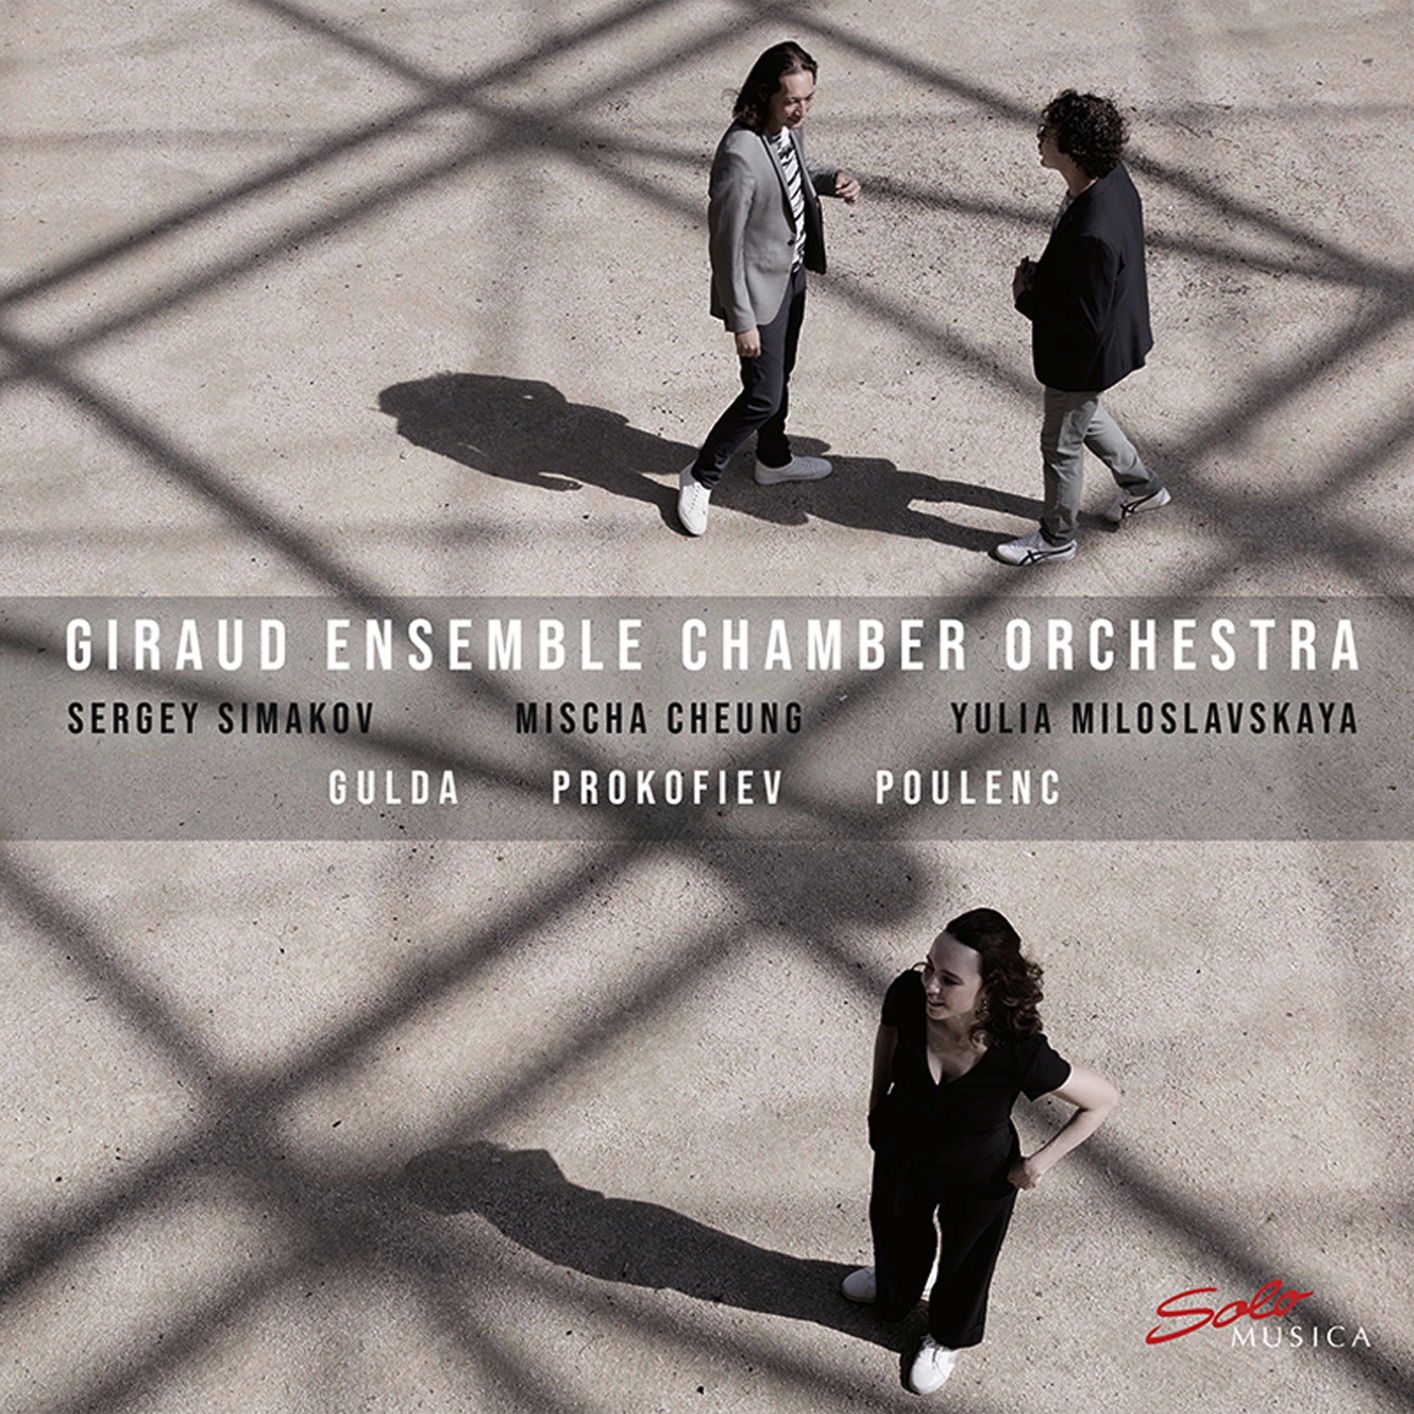 Giraud Ensemble Chamber Orchestra – Gulda – Prokofiev – Poulenc (2019) [FLAC 24bit/96kHz]